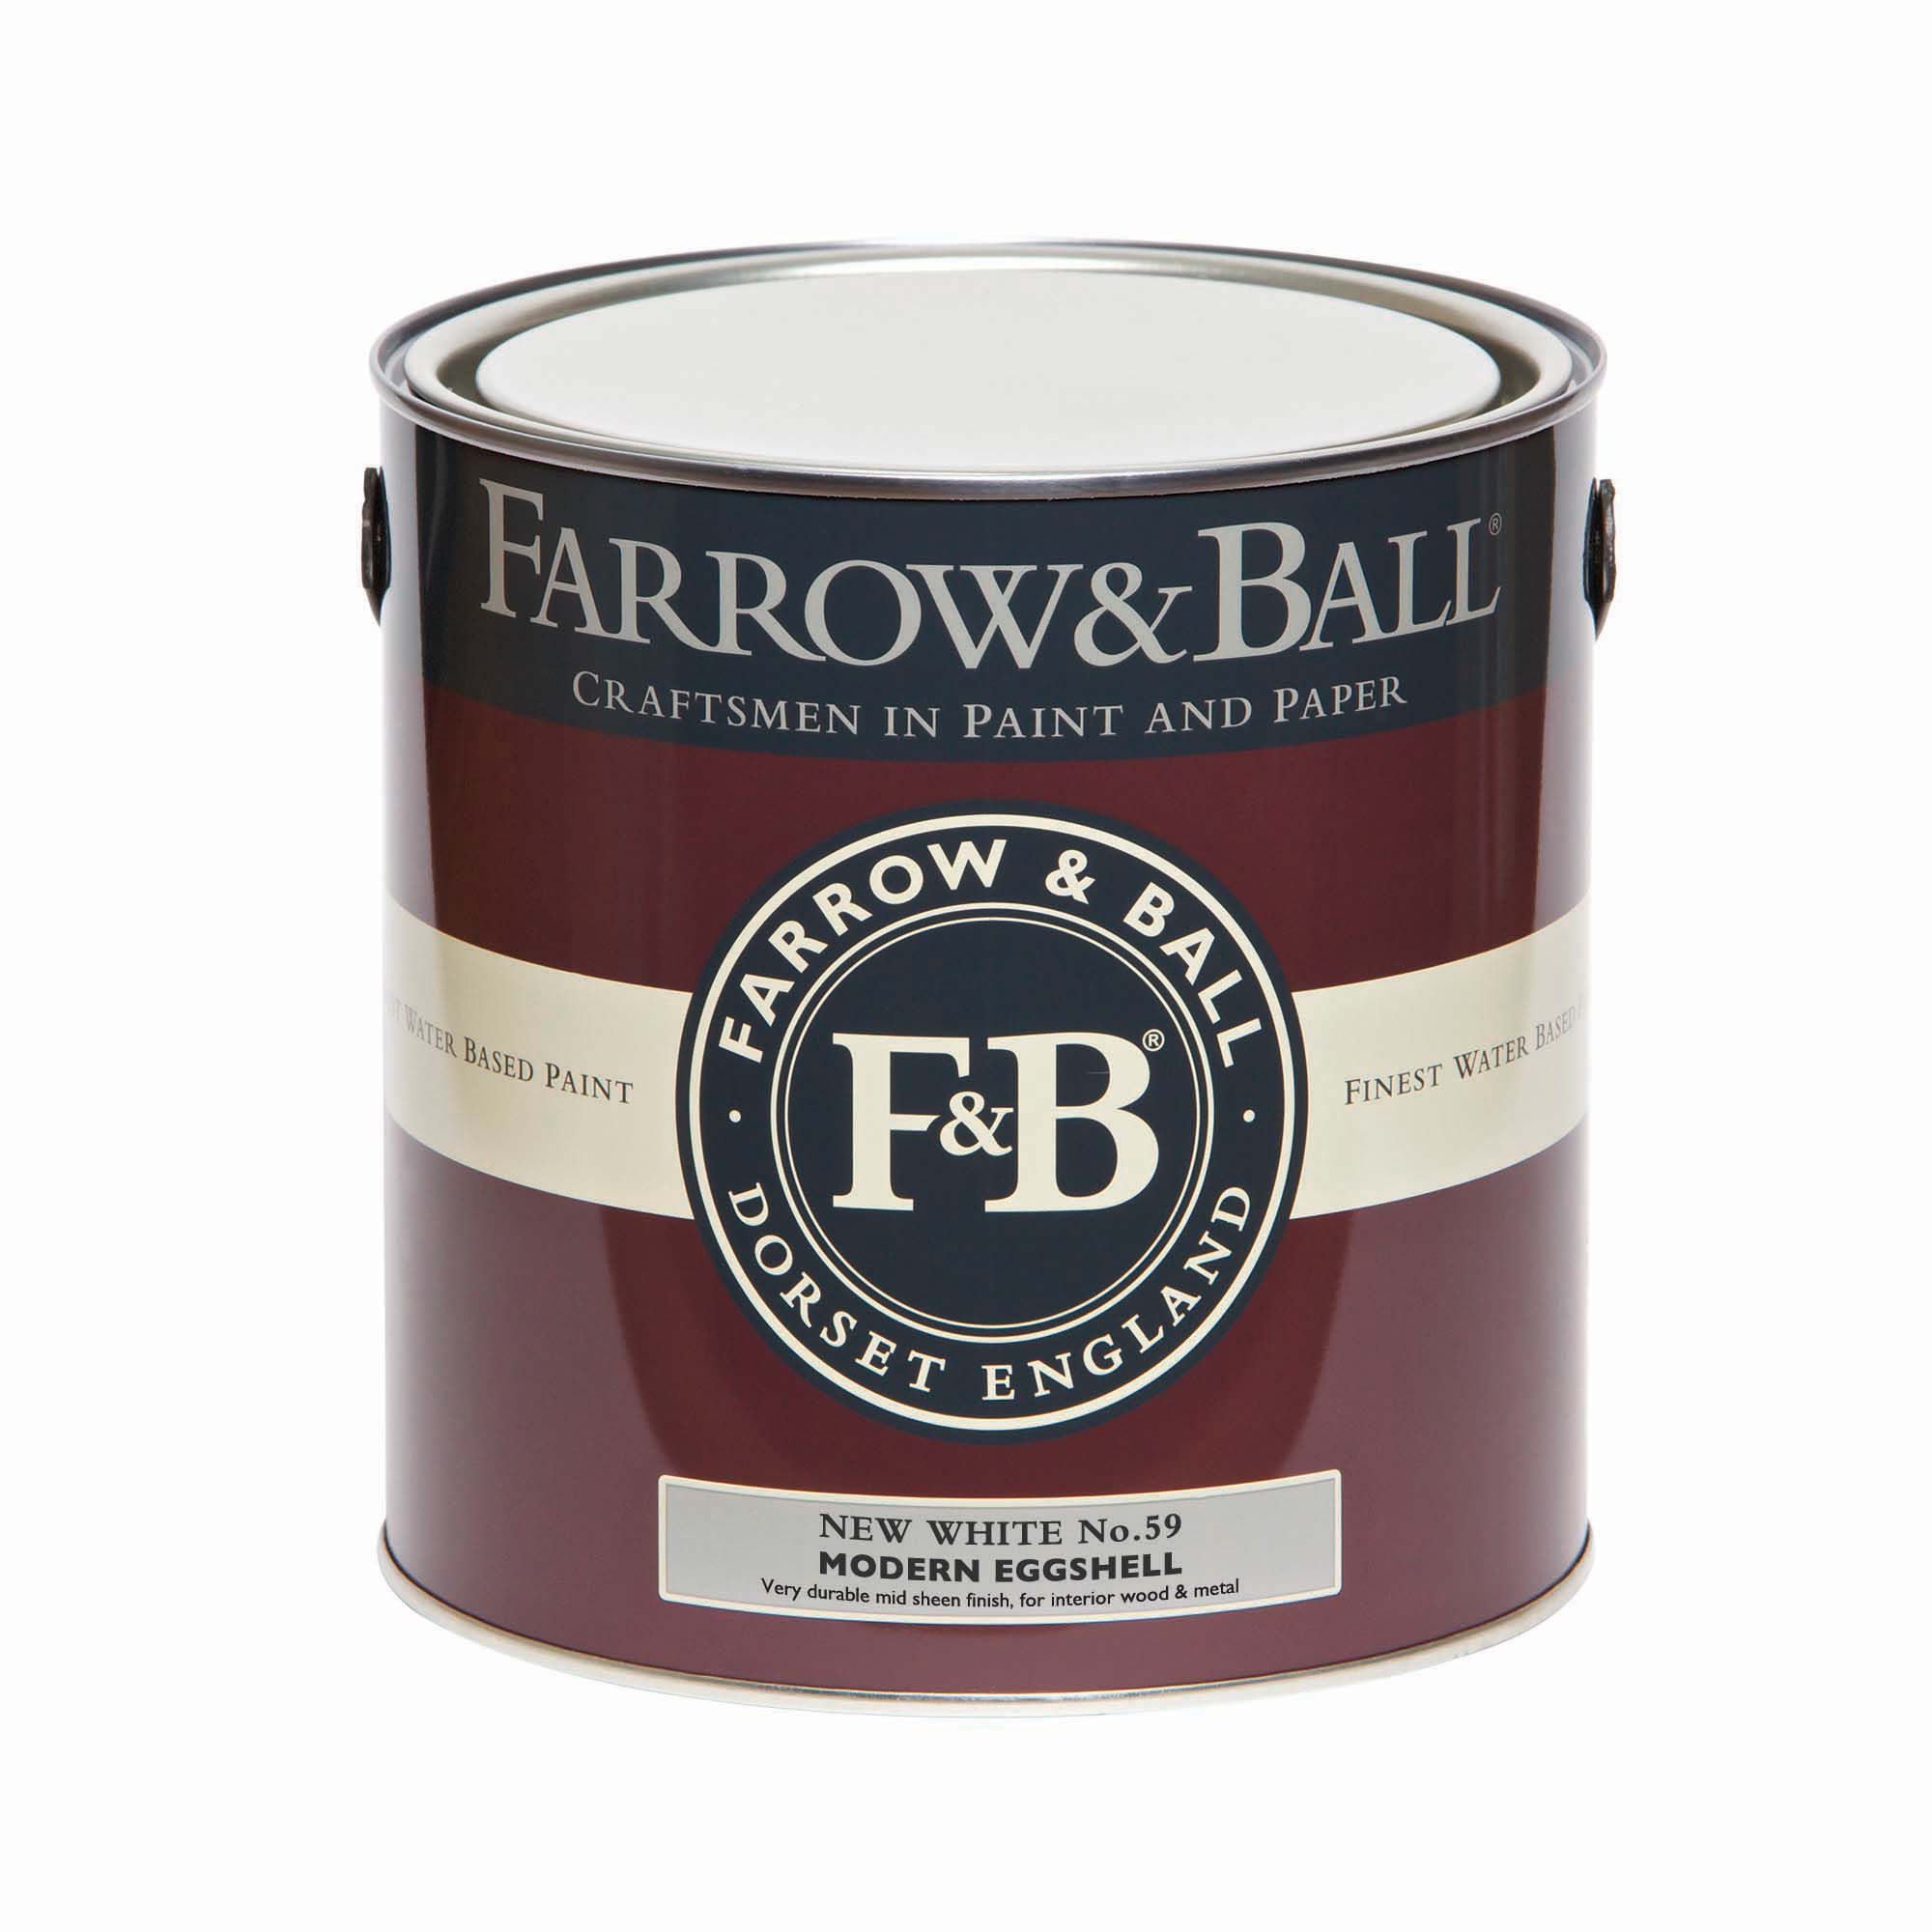 Farrow & Ball Modern New White No.59 Eggshell Paint, 2.5L